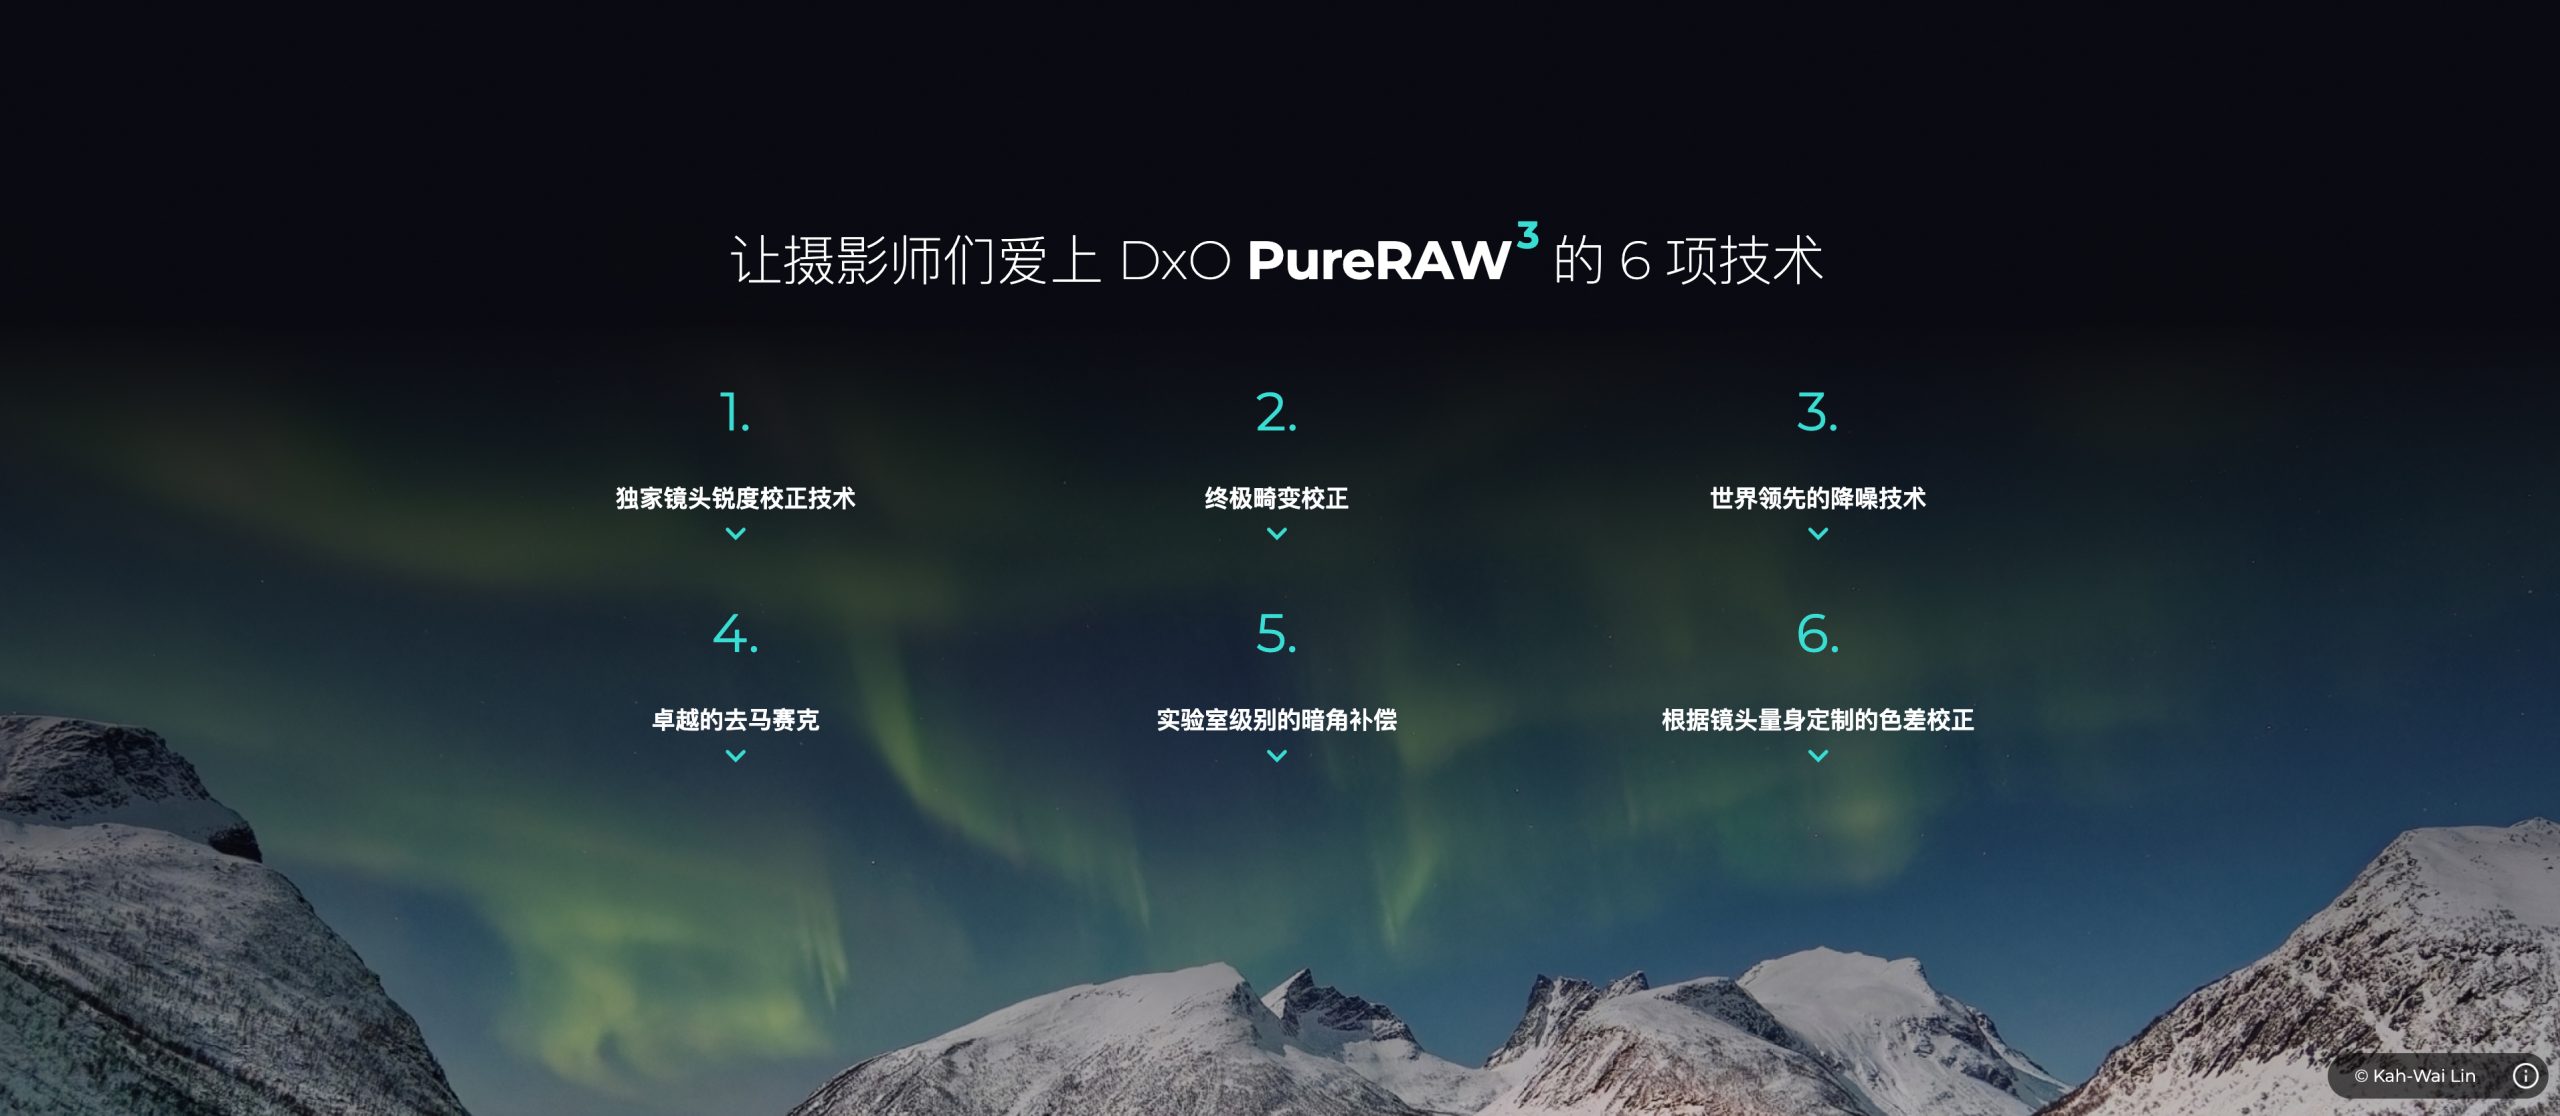 DxO PureRaw for Mac v3.8.0.30 中文版 RAW镜头锐度清晰降噪软件/插件 插件预设 第4张